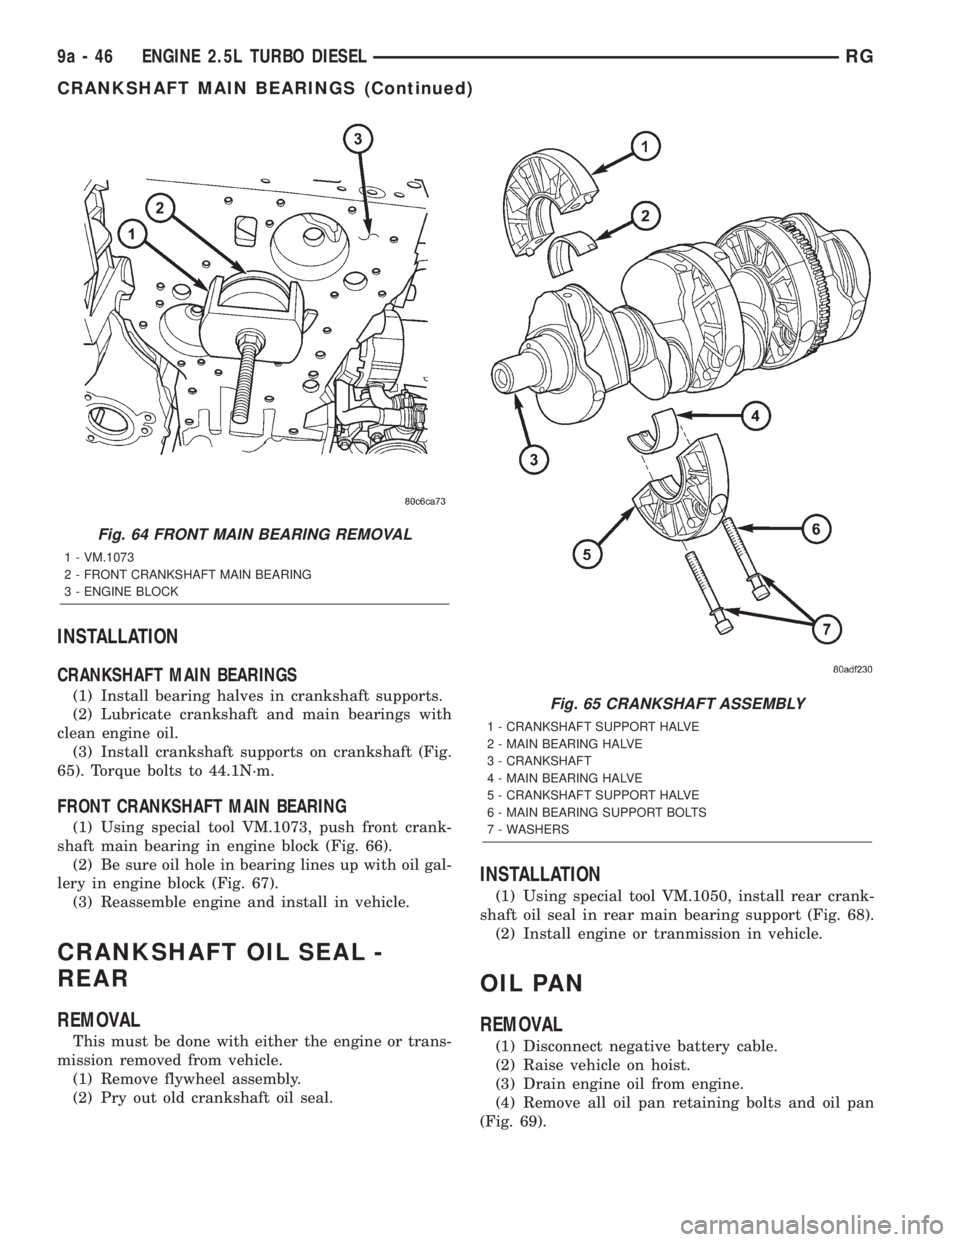 CHRYSLER VOYAGER 2001  Service Manual INSTALLATION
CRANKSHAFT MAIN BEARINGS
(1) Install bearing halves in crankshaft supports.
(2) Lubricate crankshaft and main bearings with
clean engine oil.
(3) Install crankshaft supports on crankshaft